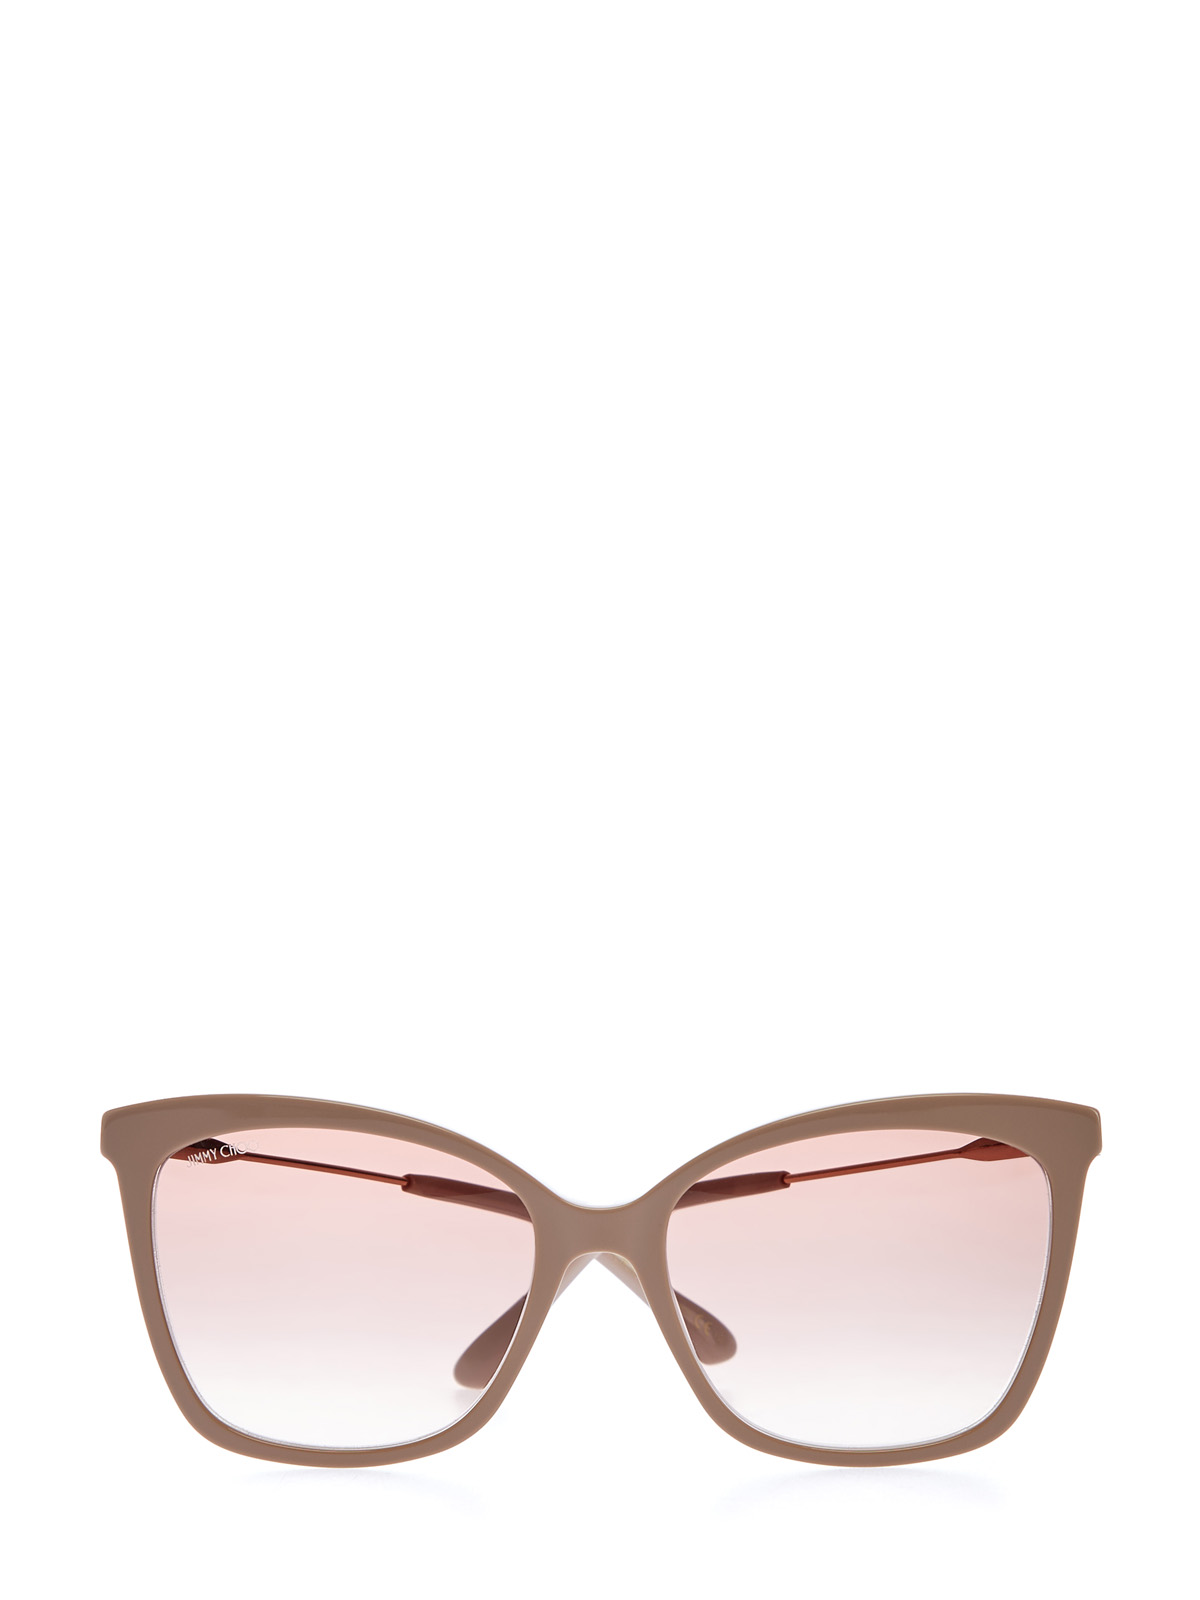 Солнцезащитные очки Maci с кристаллами Swarovski JIMMY CHOO  (sunglasses), цвет розовый - фото 1